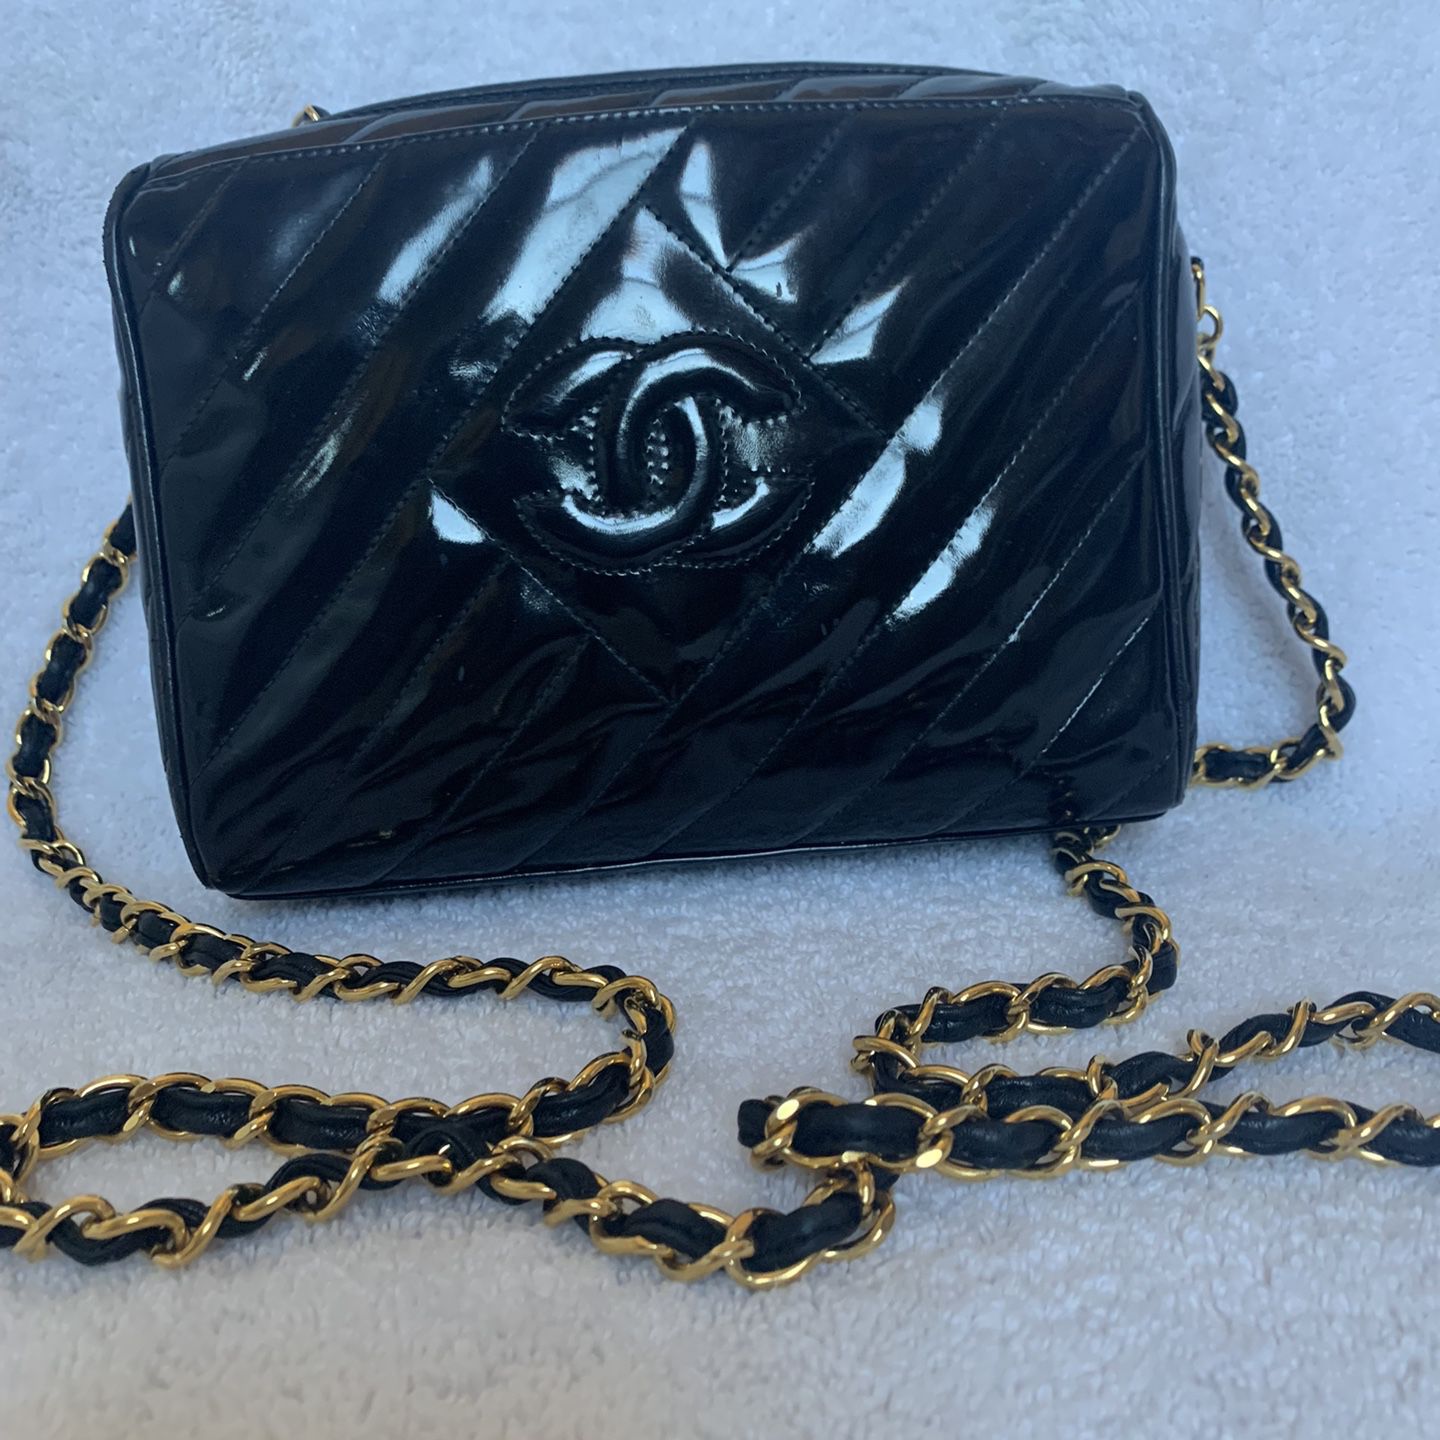 Authentic black Chanel camera bag for Sale in Chula Vista, CA - OfferUp